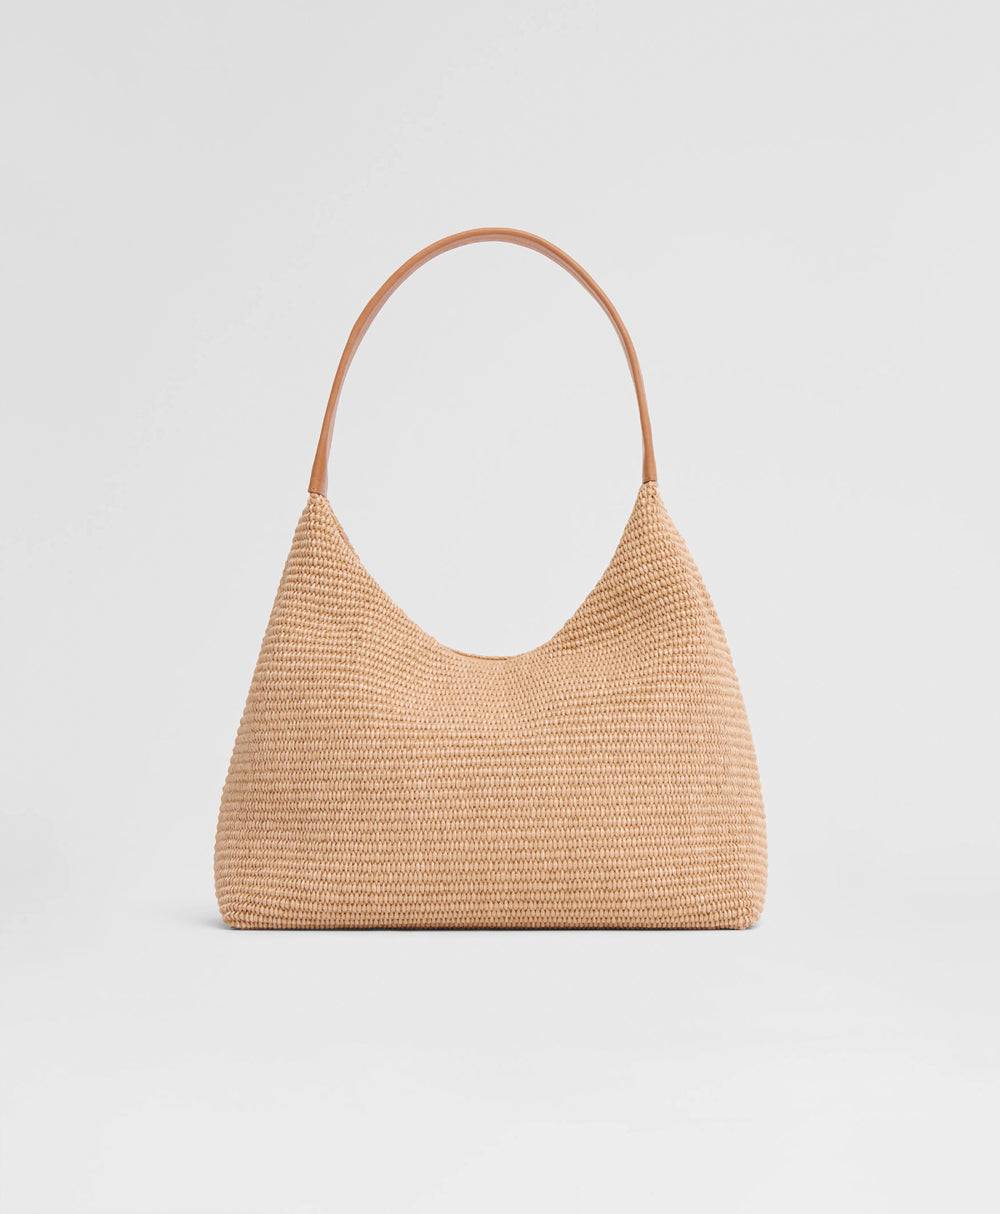 C.A.P. Hobo Bag – Karen Wilson Handbags